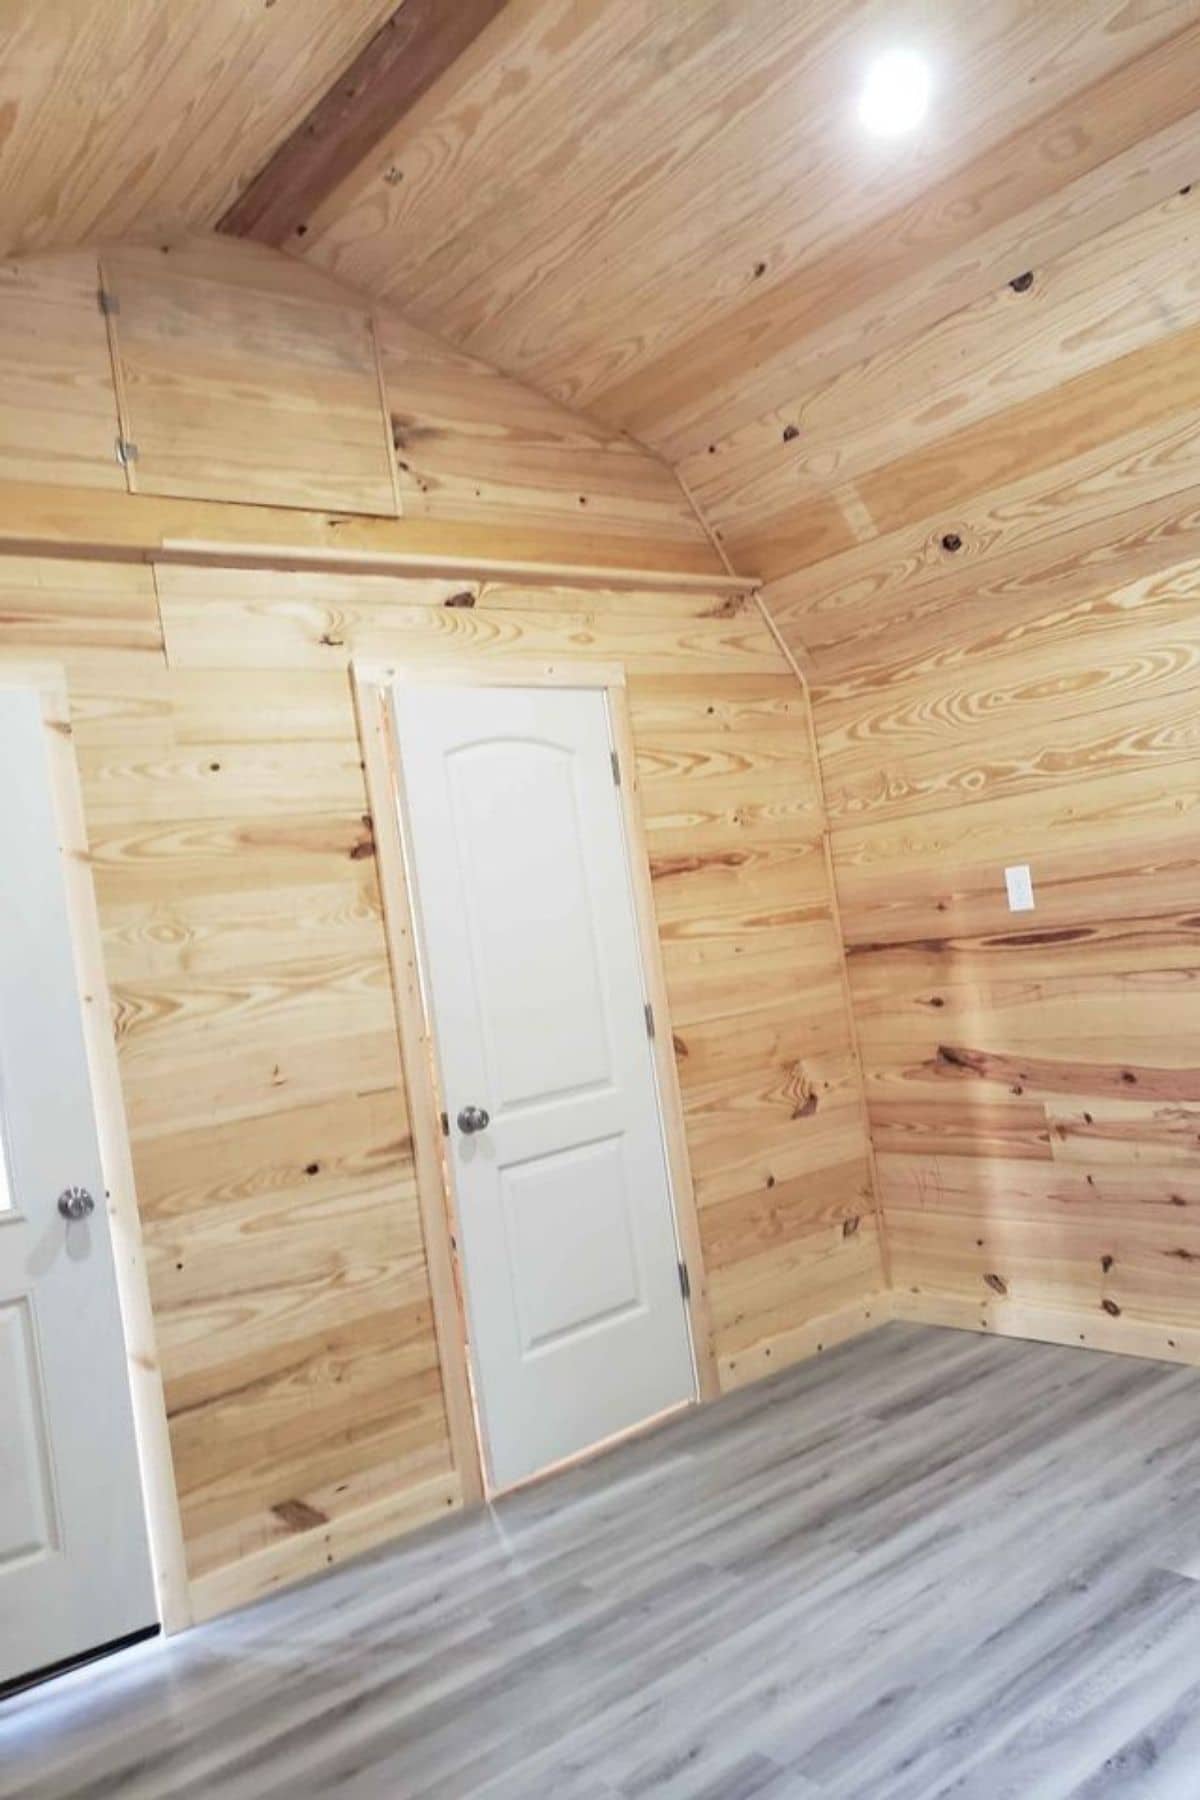 light wood walls and medium wood floor with white doors onwall